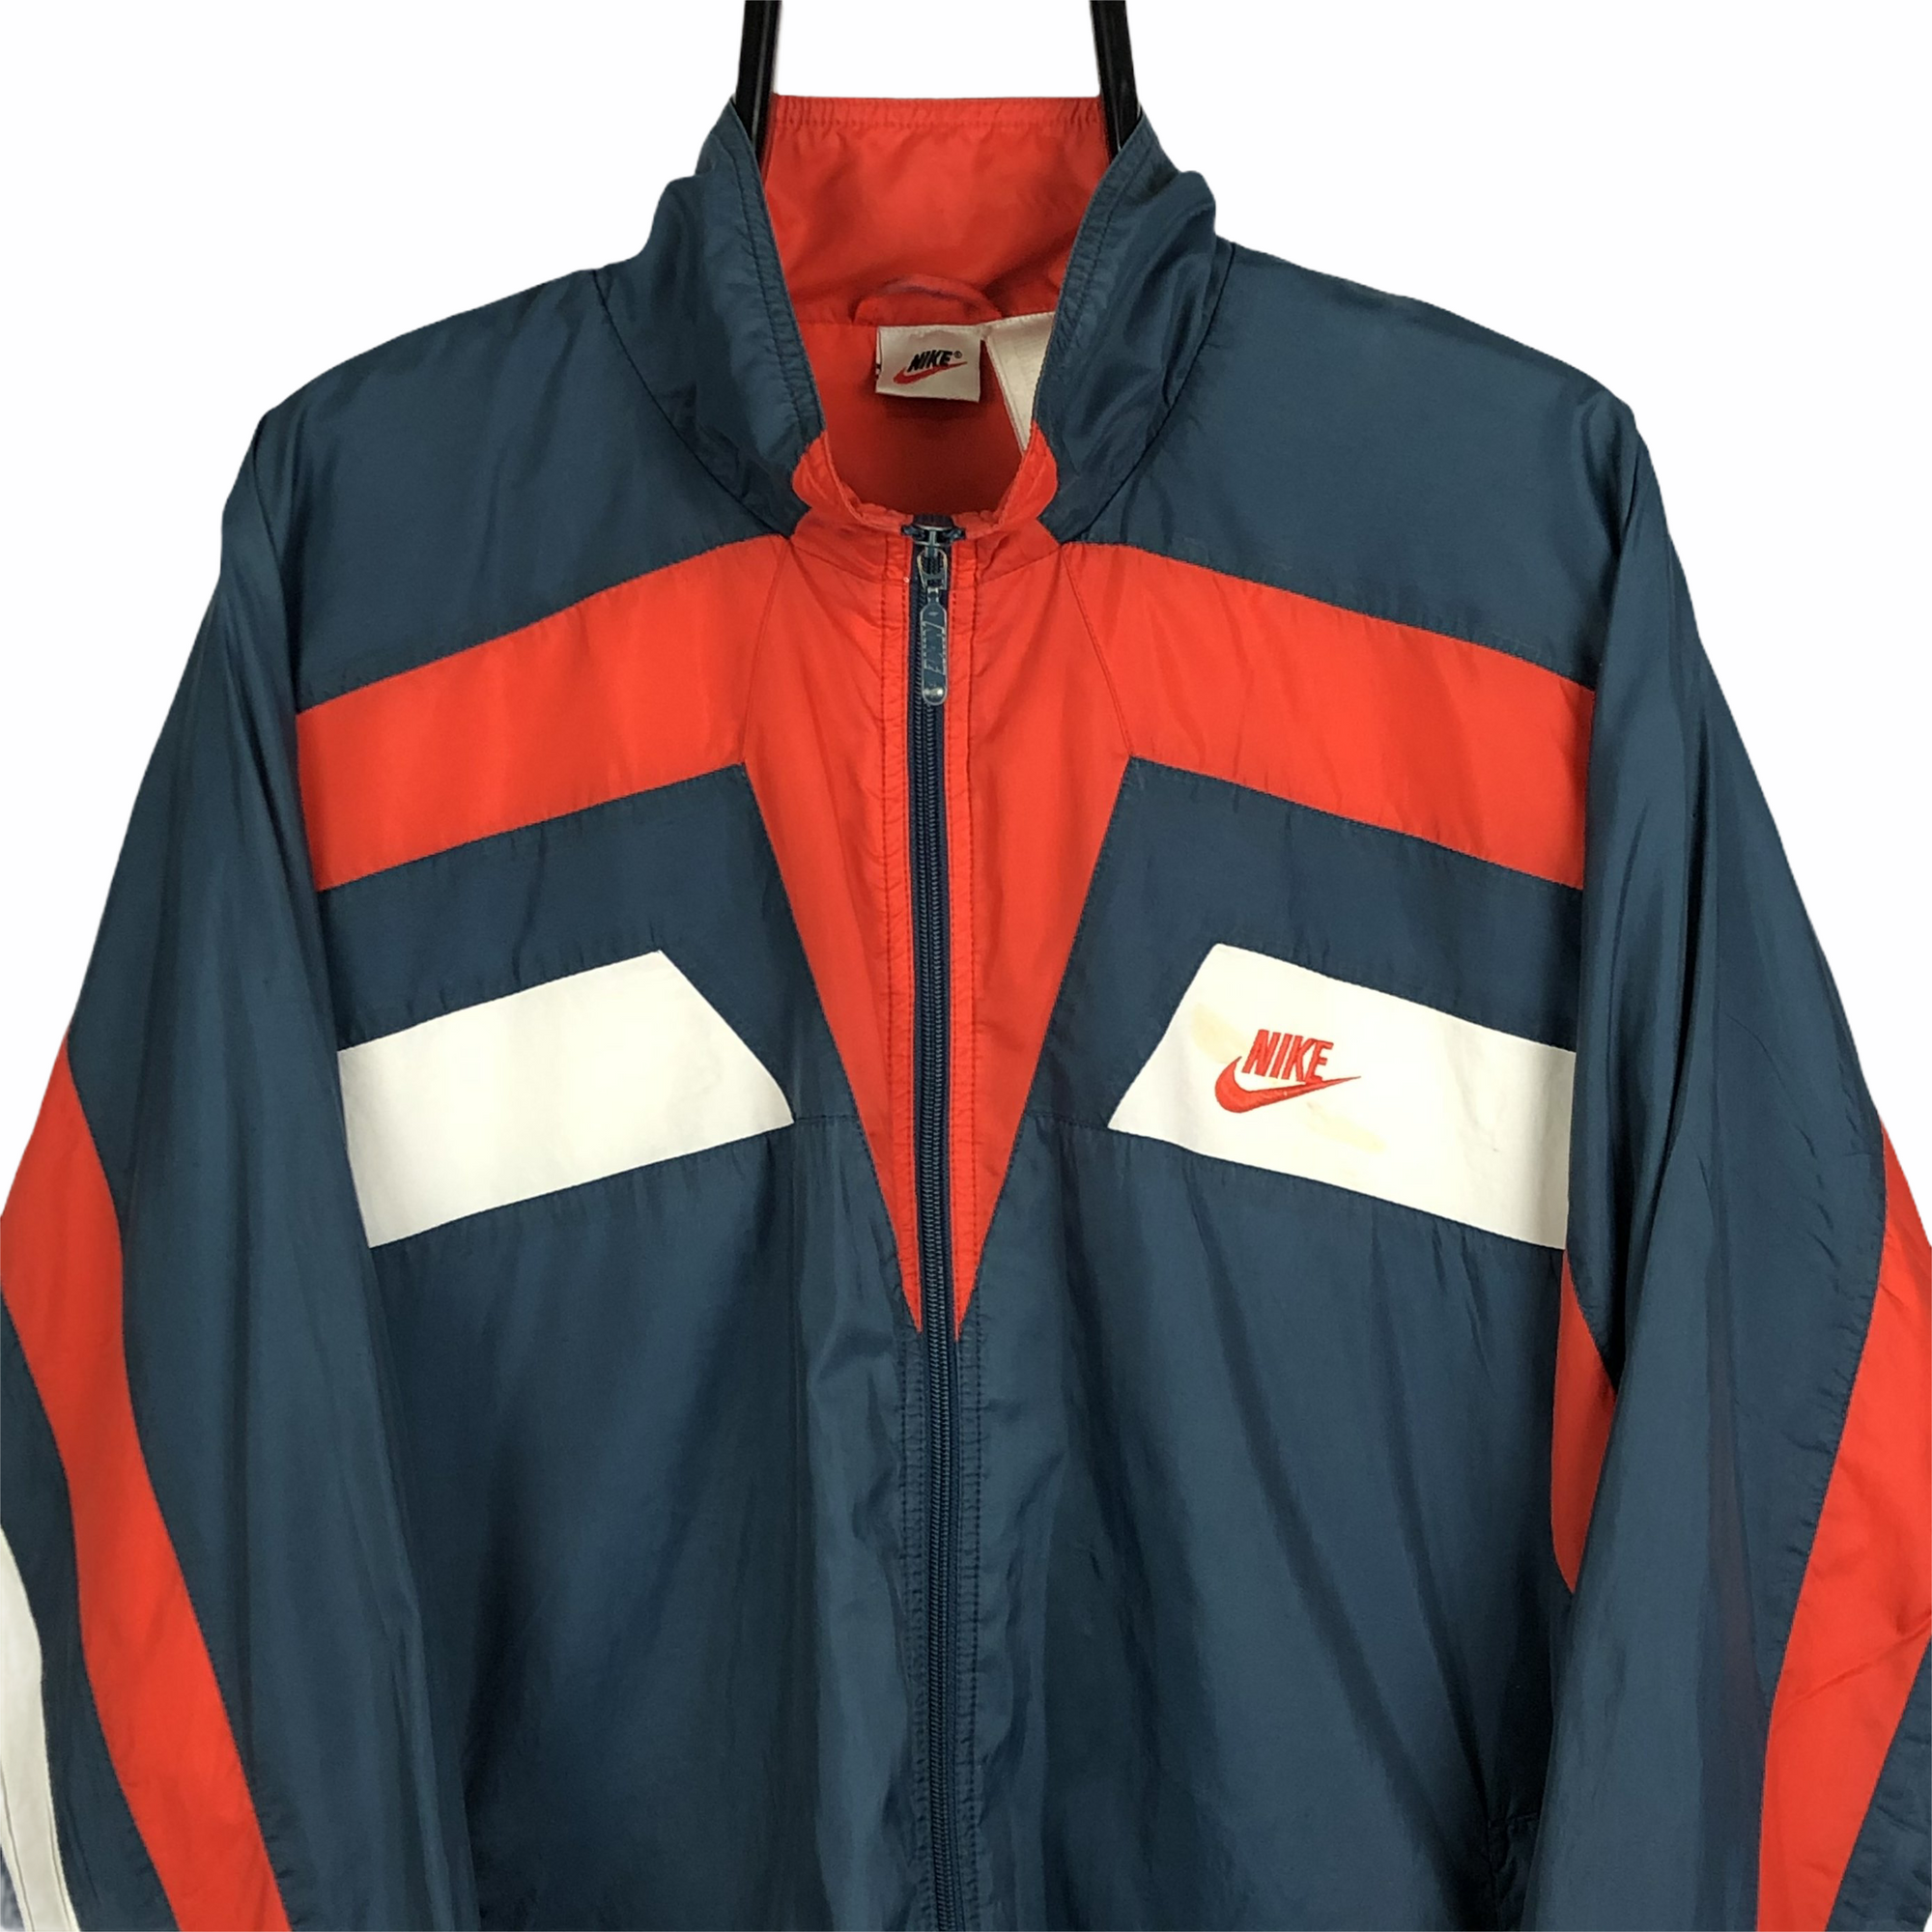 Vintage 90s Nike Track Jacket - Men's Large/Women's XL